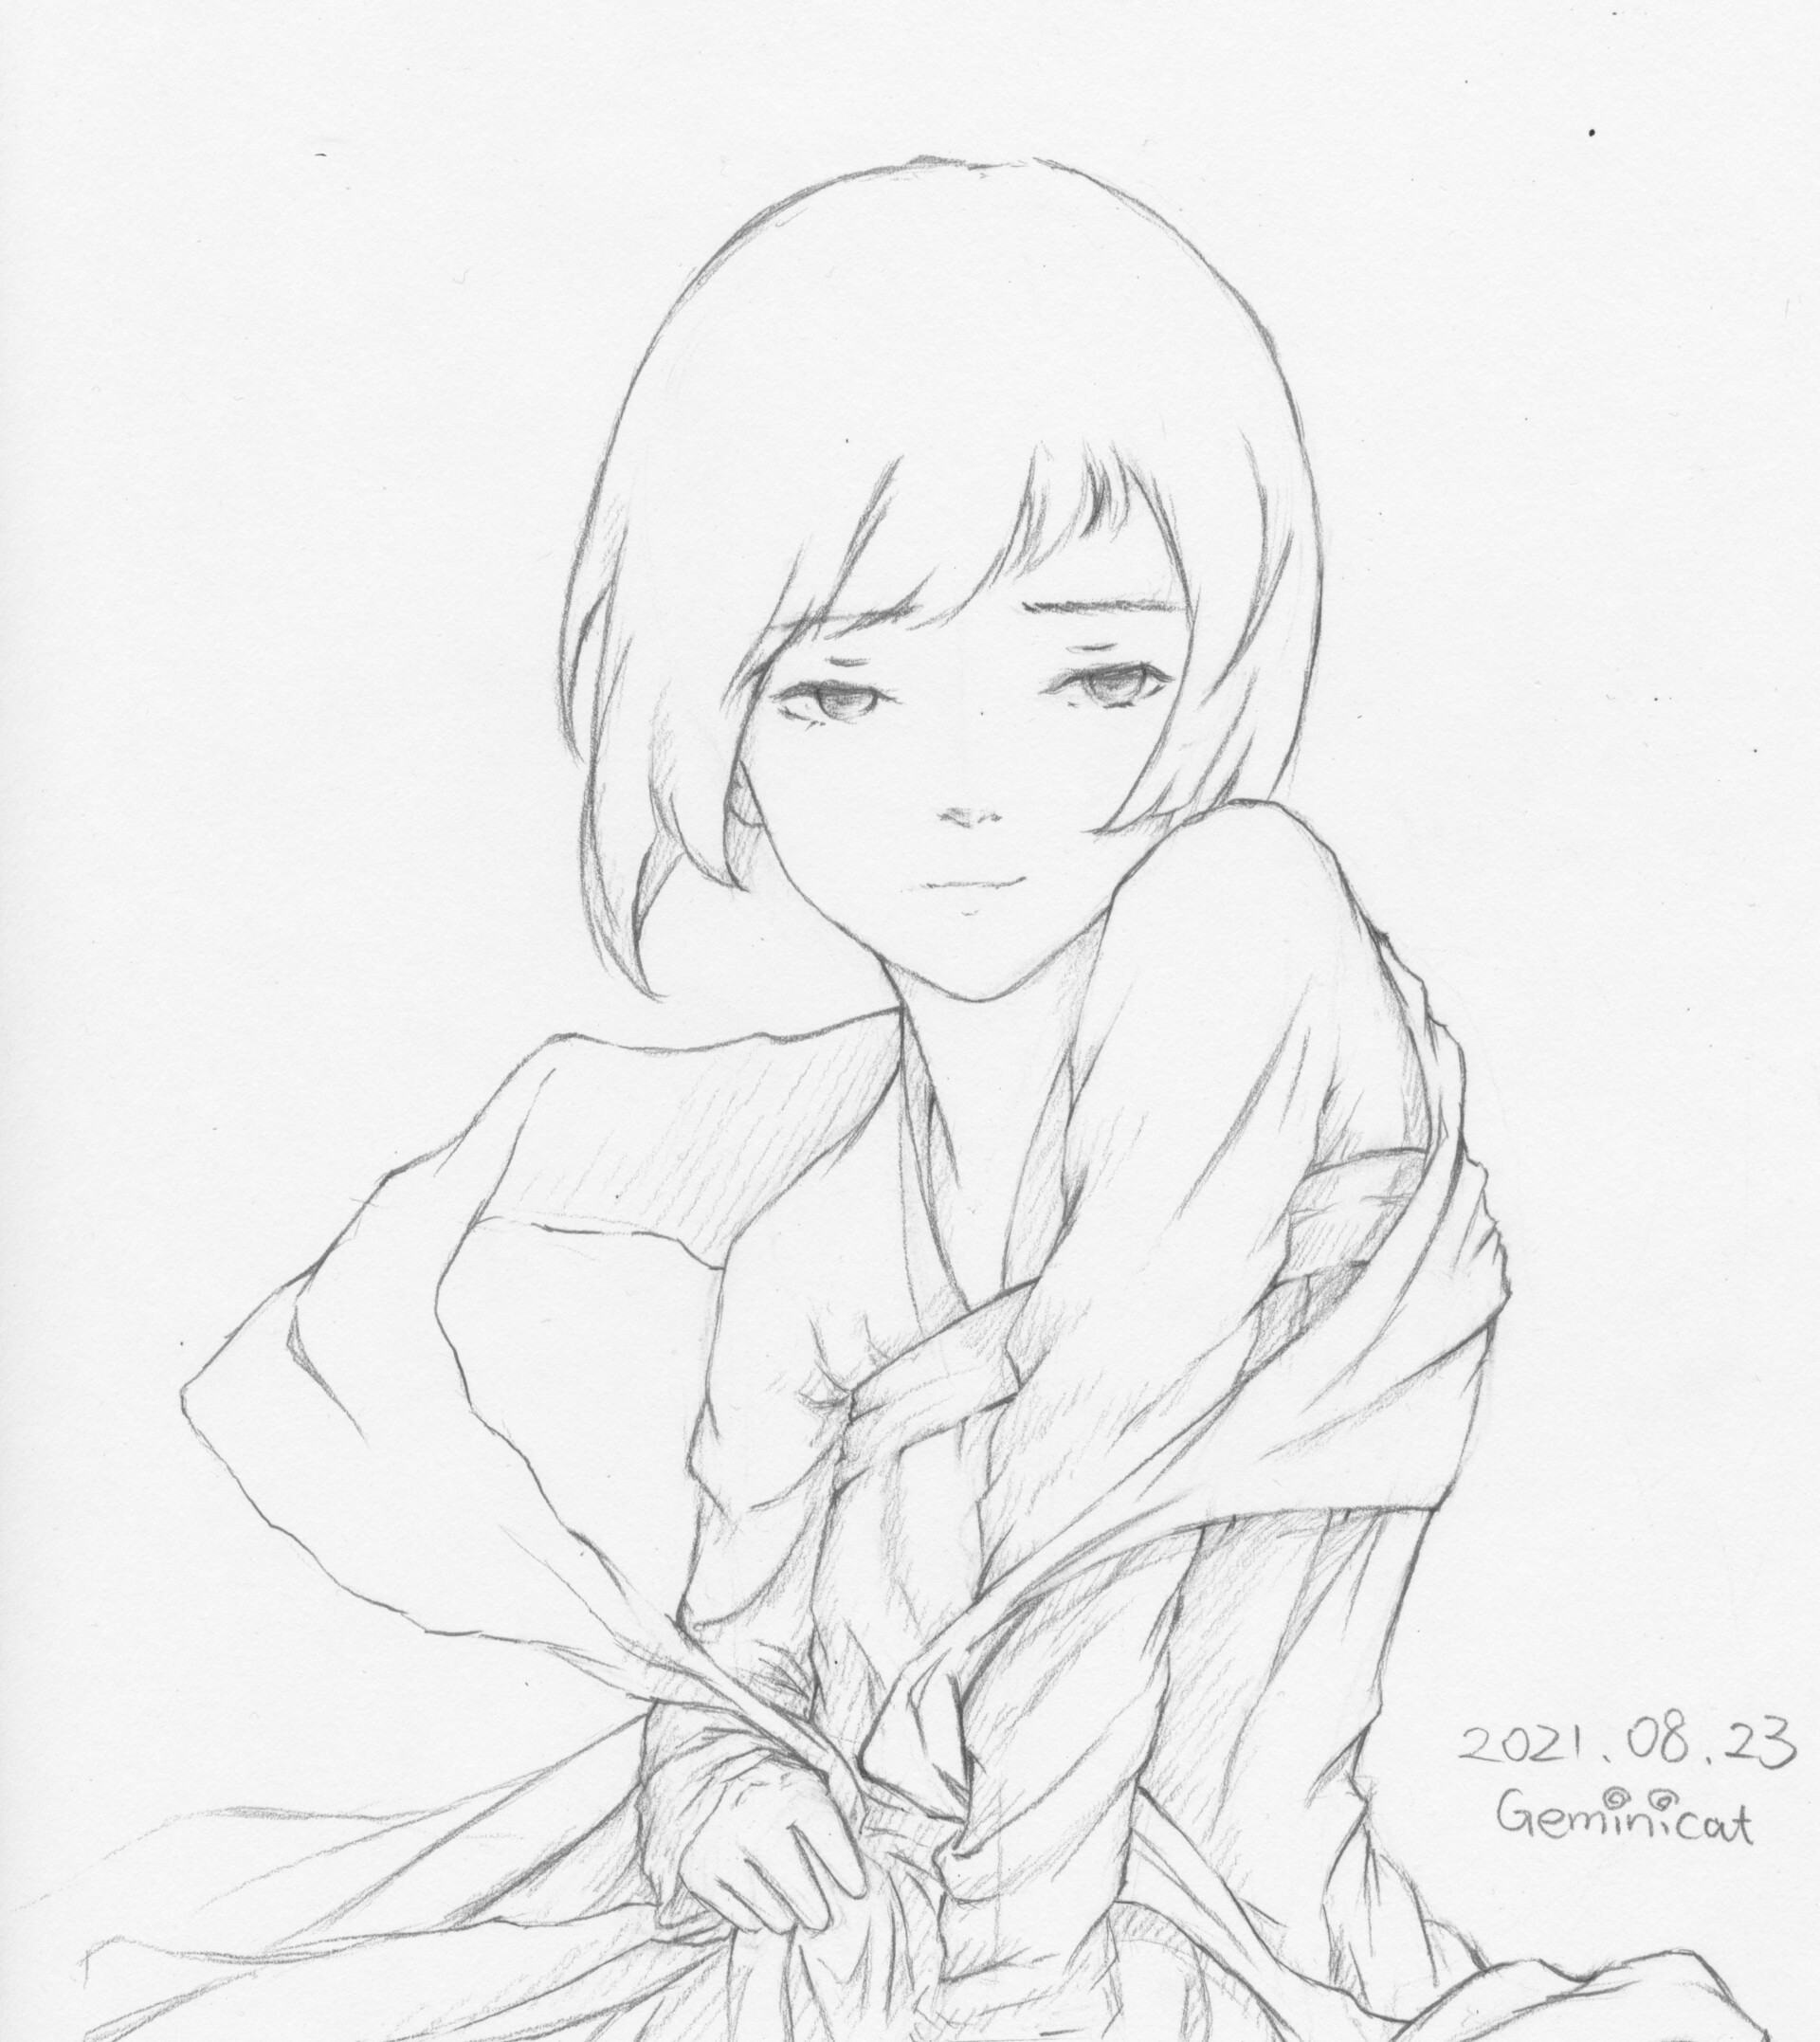 ArtStation - Anime girl drawing